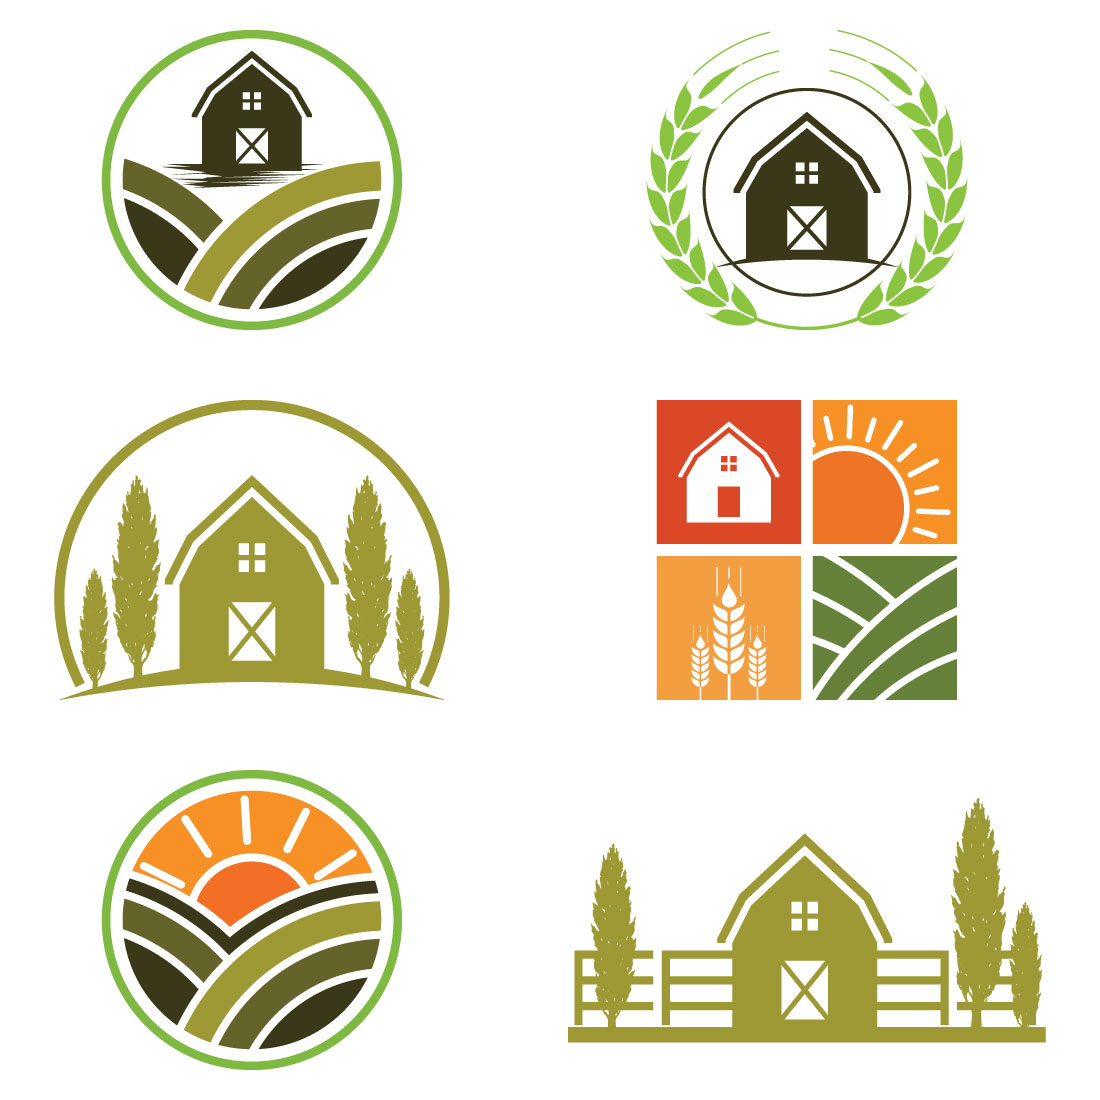 Farm House Concept Logo Template cover image.